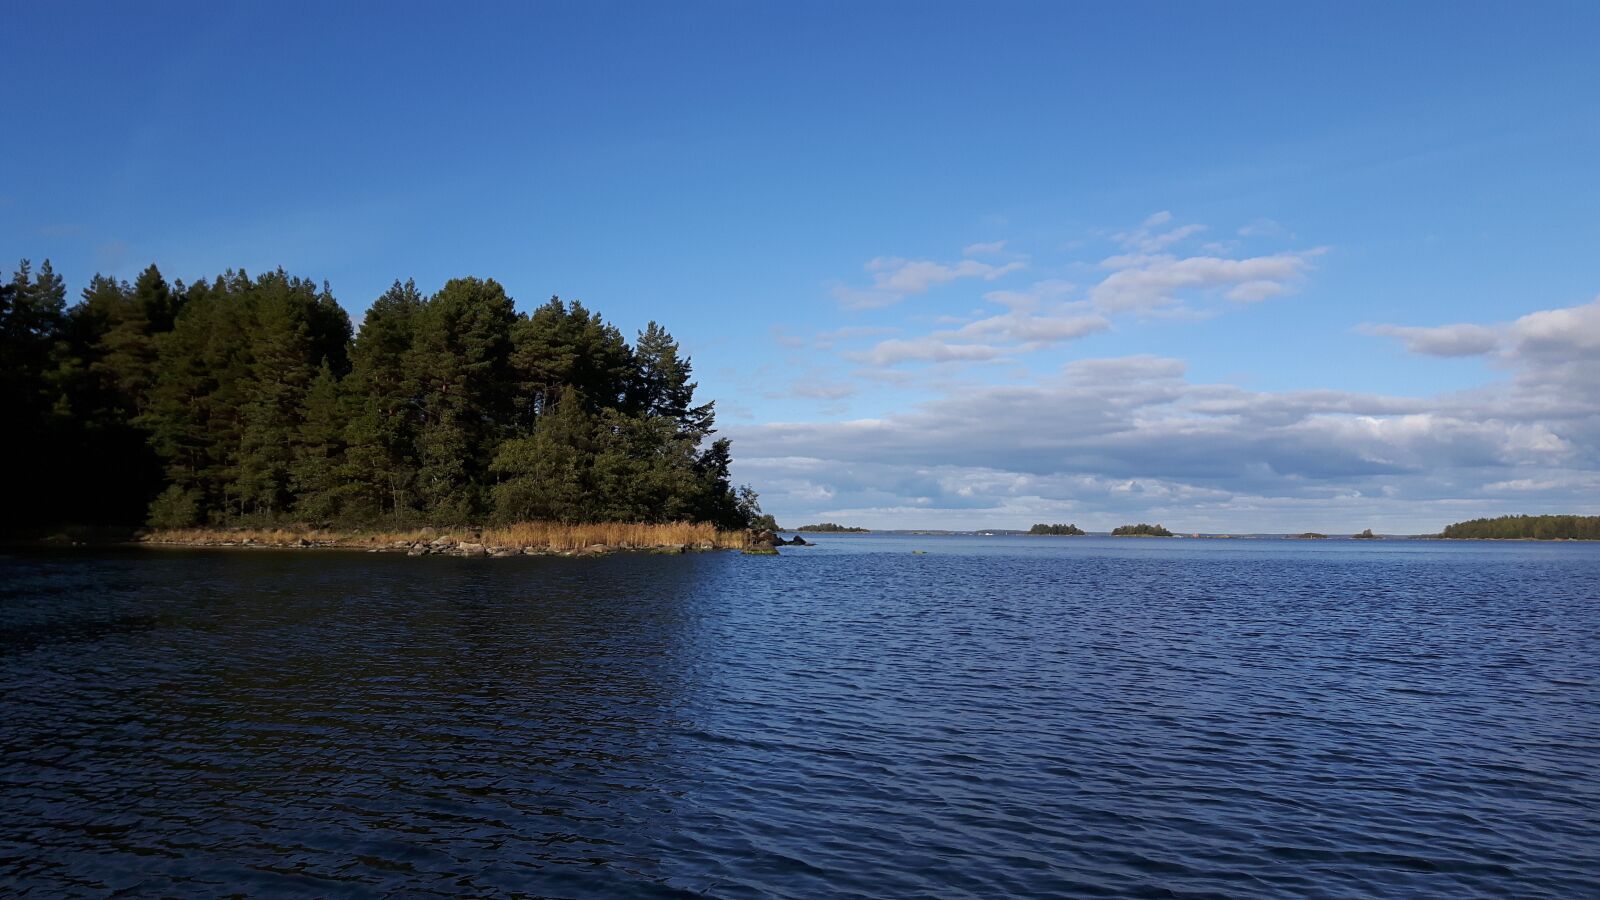 Samsung Galaxy S5 Neo sample photo. Water bodies, nature, panorama photography